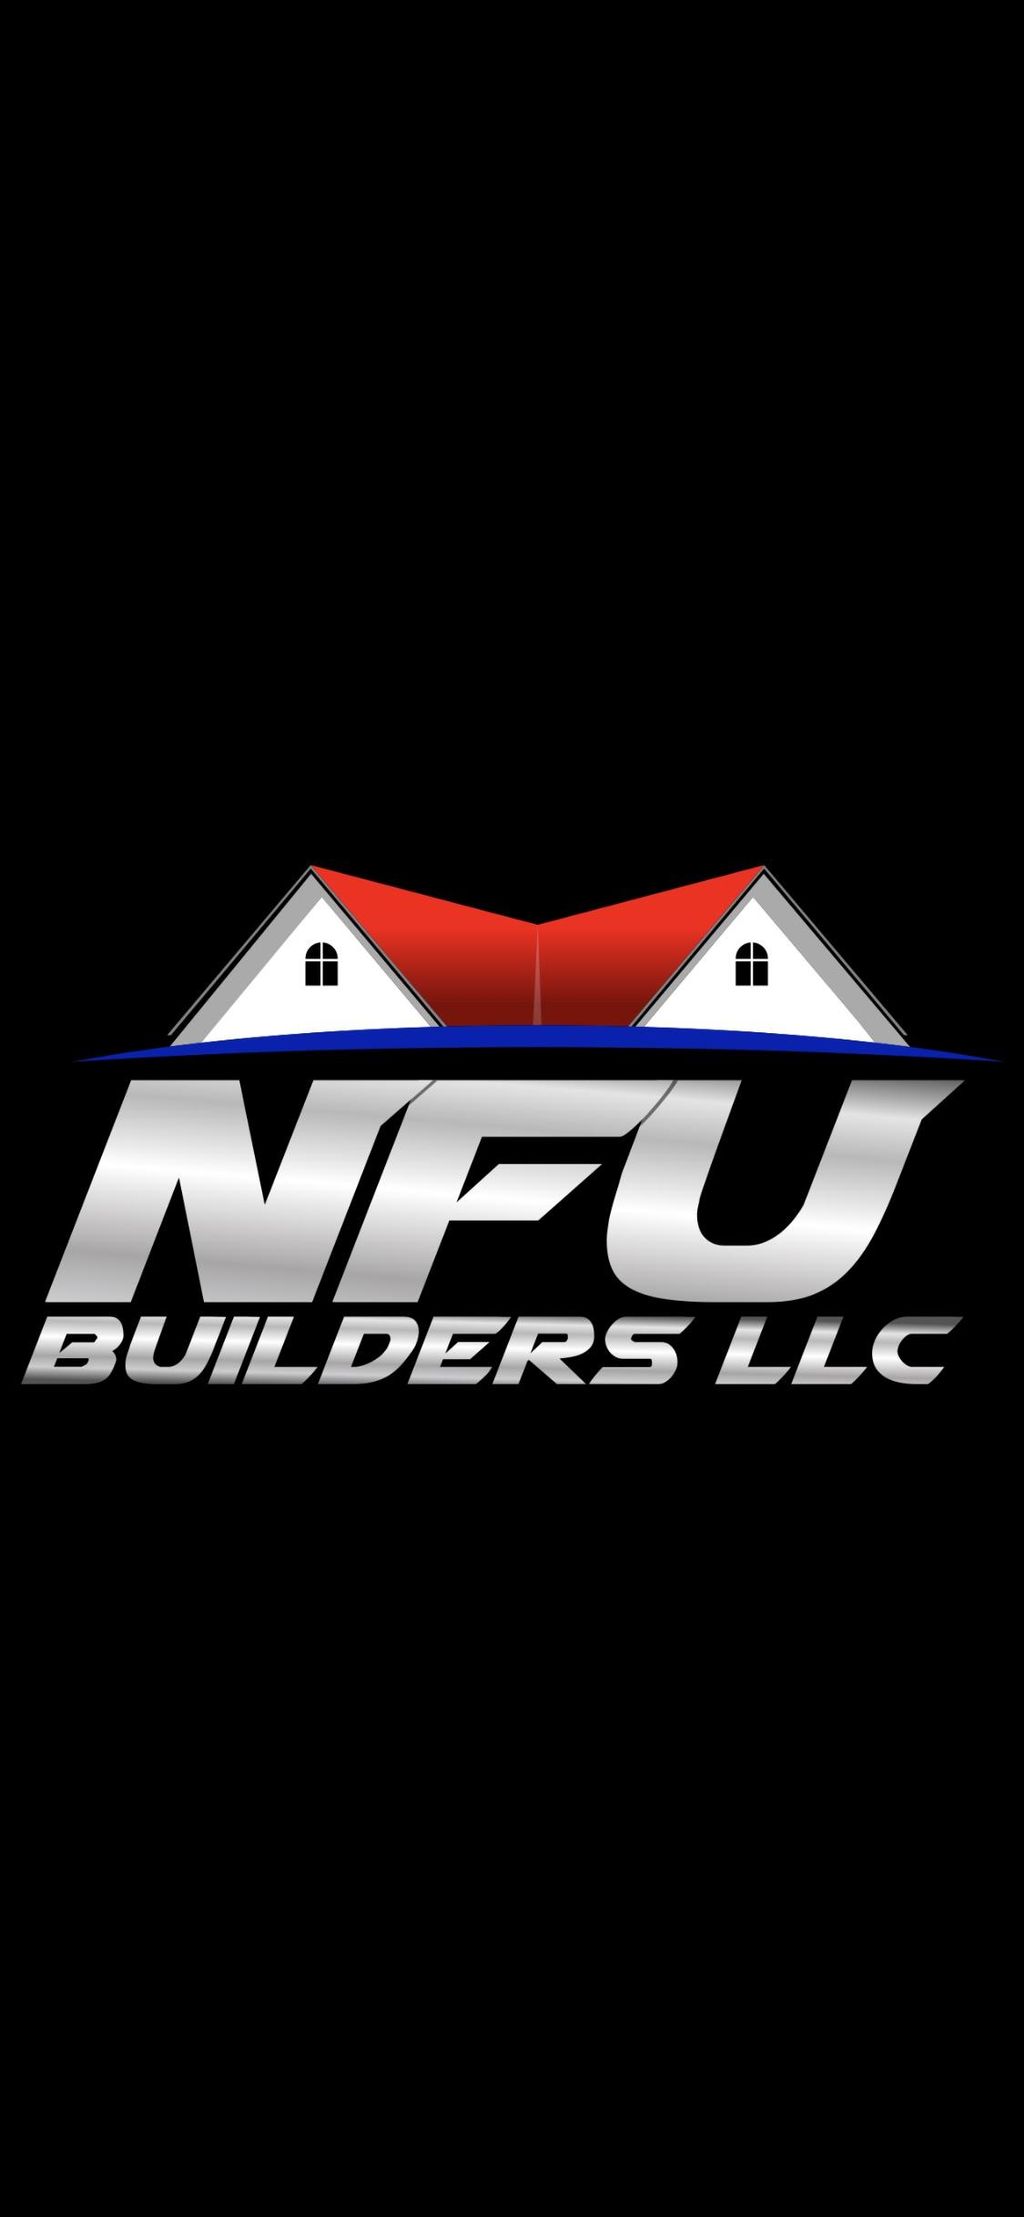 NFU Builders LLC